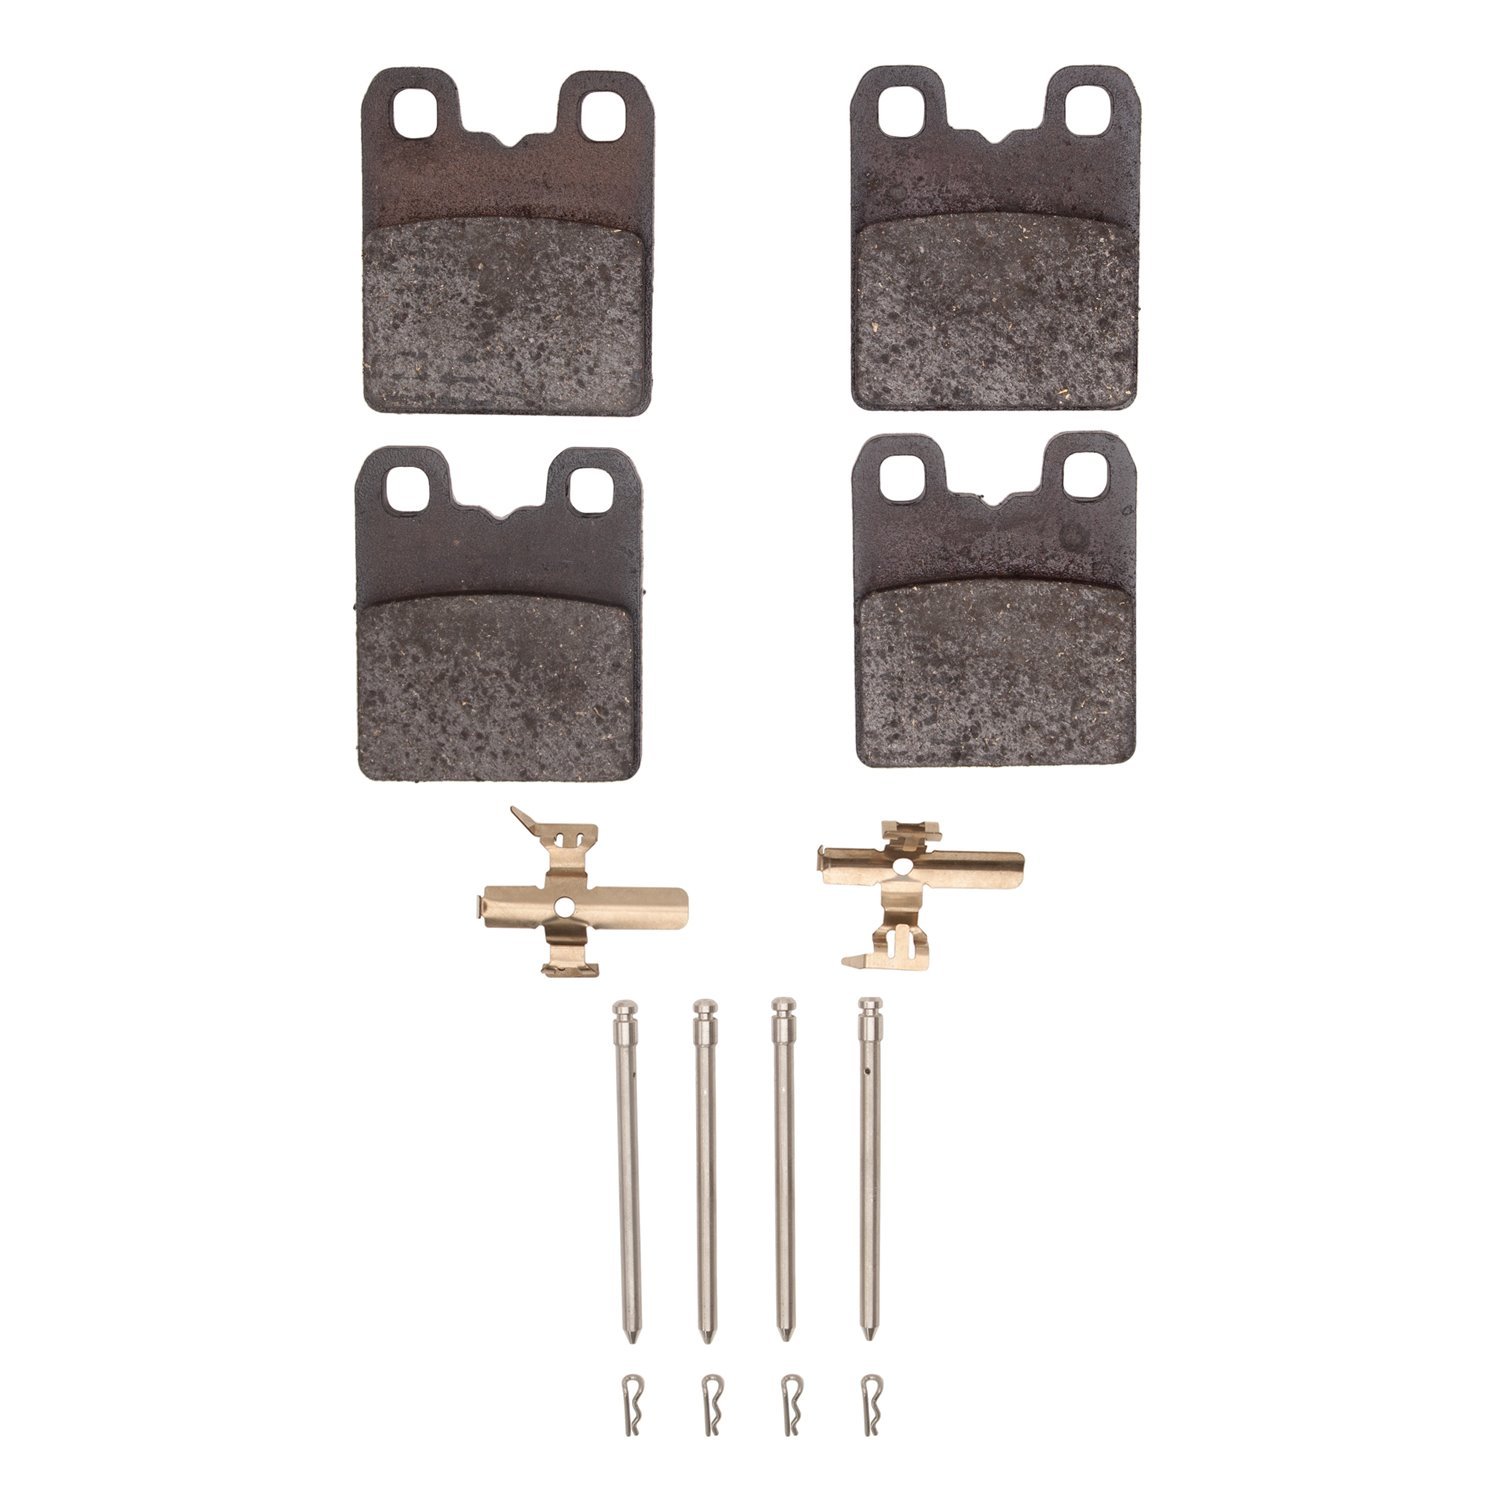 1551-2069-01 5000 Advanced Low-Metallic Brake Pads & Hardware Kit, Fits Select Multiple Makes/Models, Position: Parking